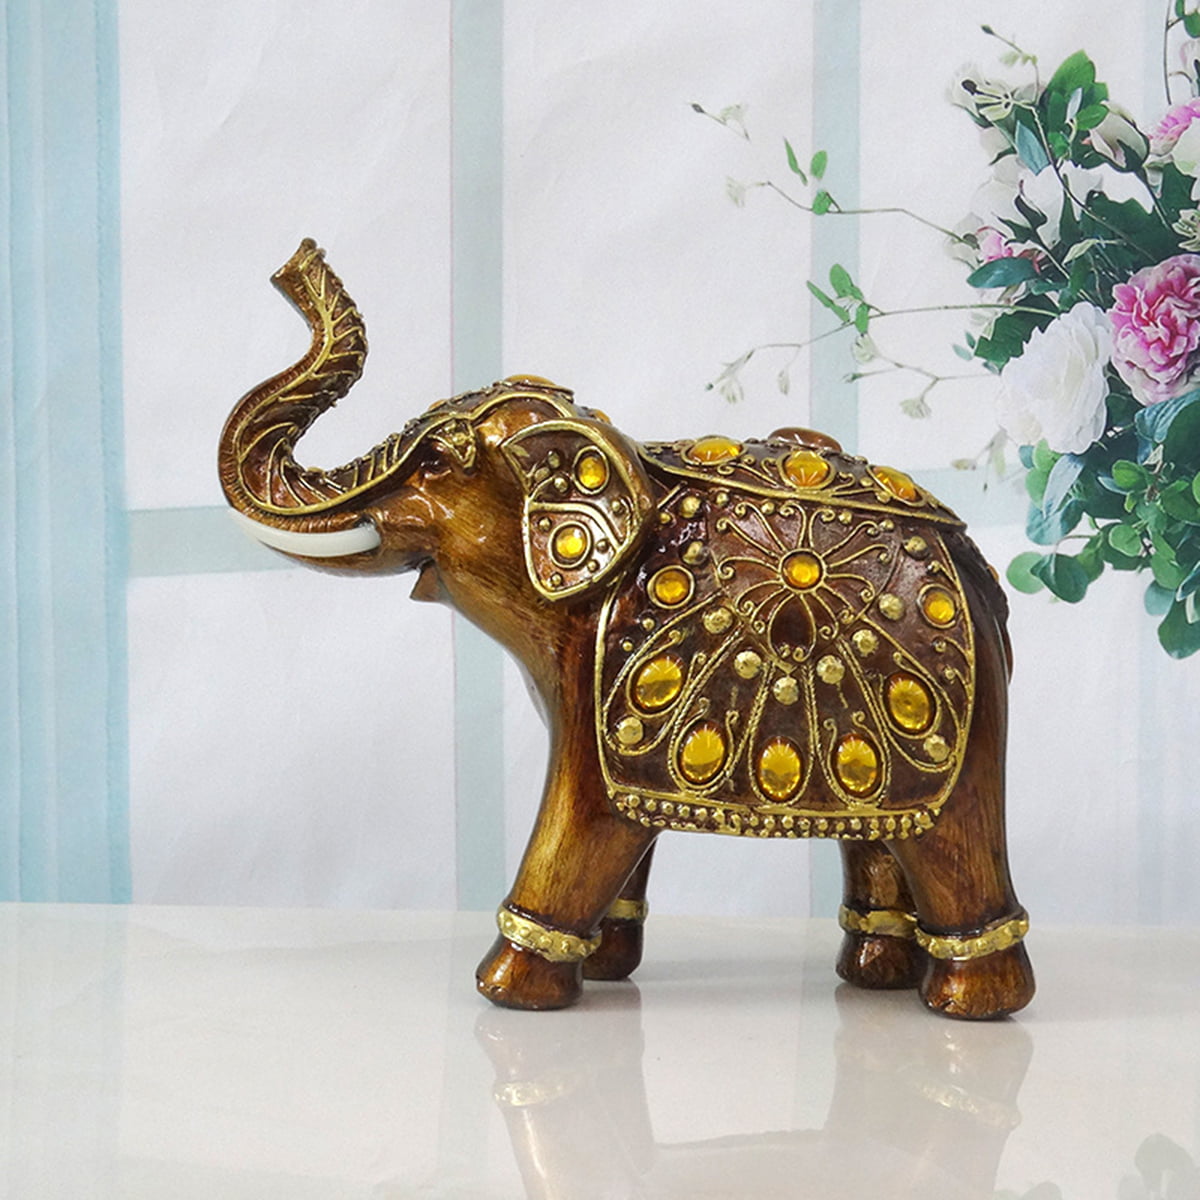 Vintage Copper Bullfighting ANIMAL Carved Elephant Statue Home Decor Ornament 